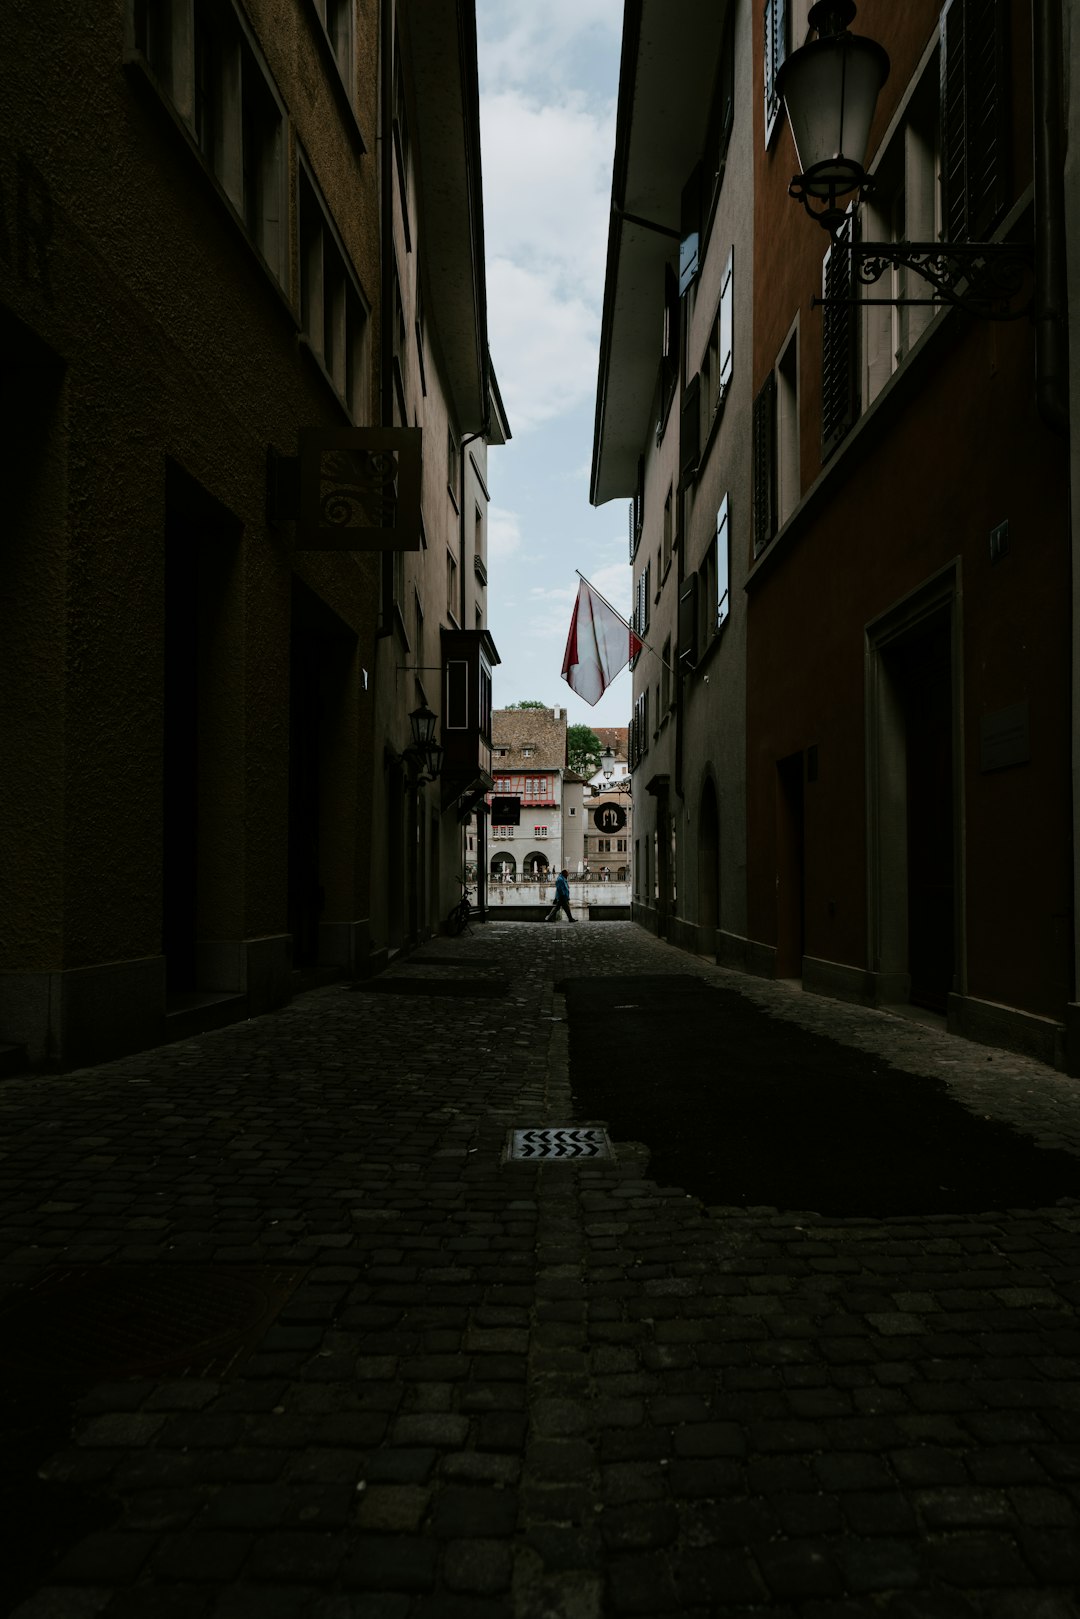 empty street between brown concrete buildings during daytime